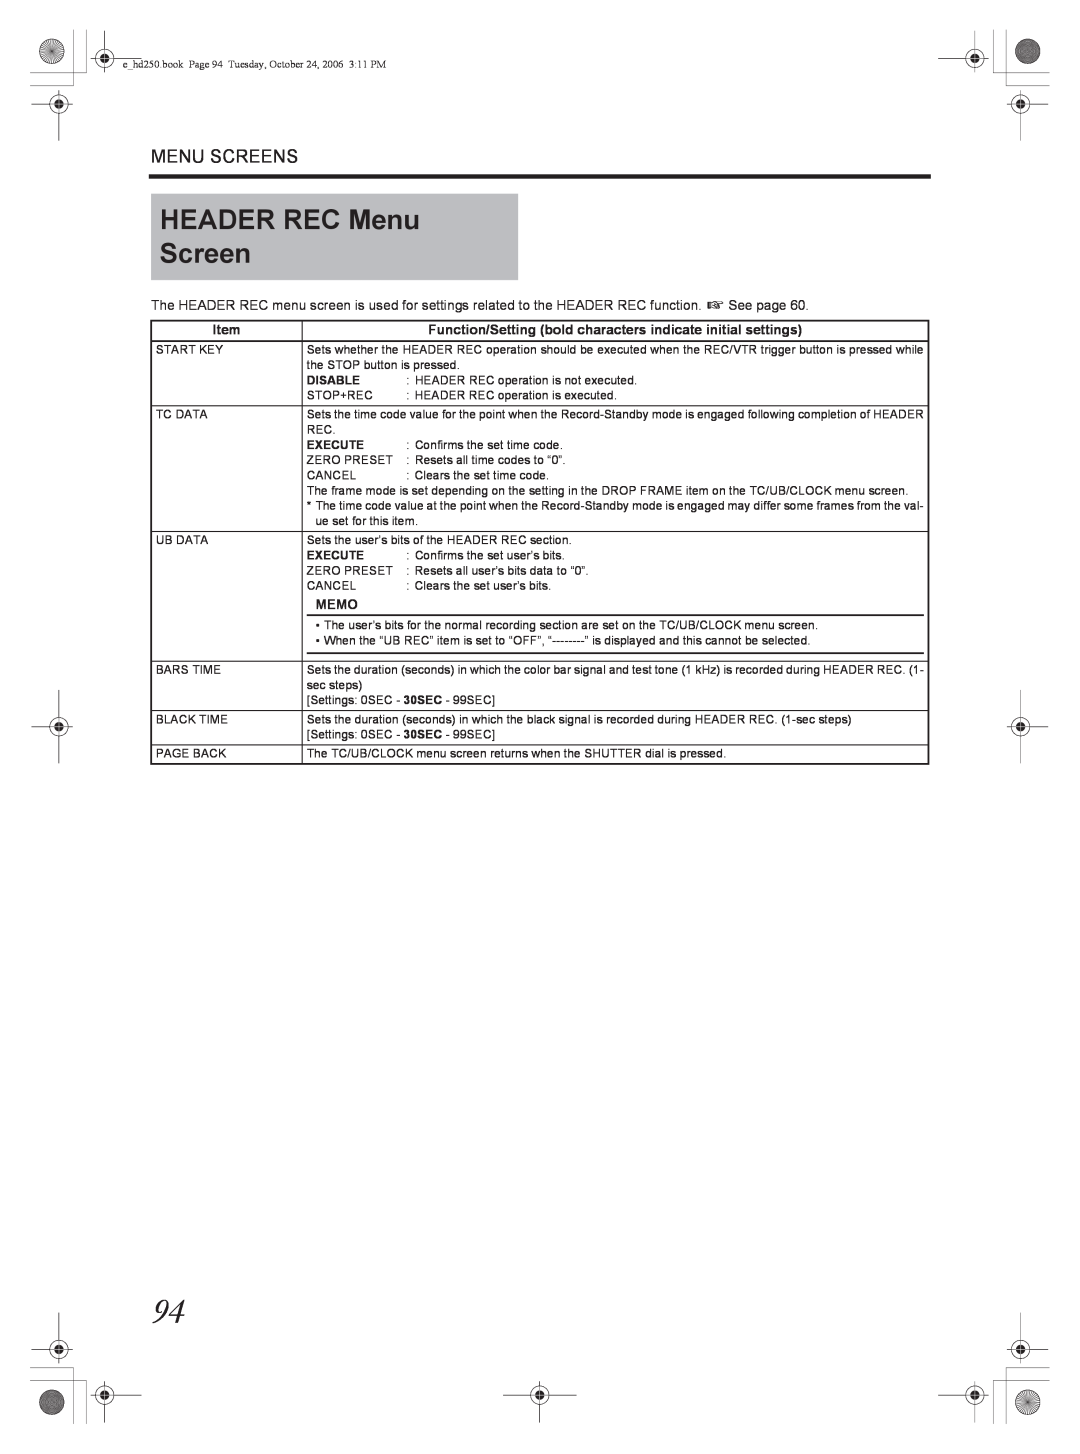 JVC GY-HD250 manual HEADER REC Menu Screen, Menu Screens, Function/Setting bold characters indicate initial settings, Memo 